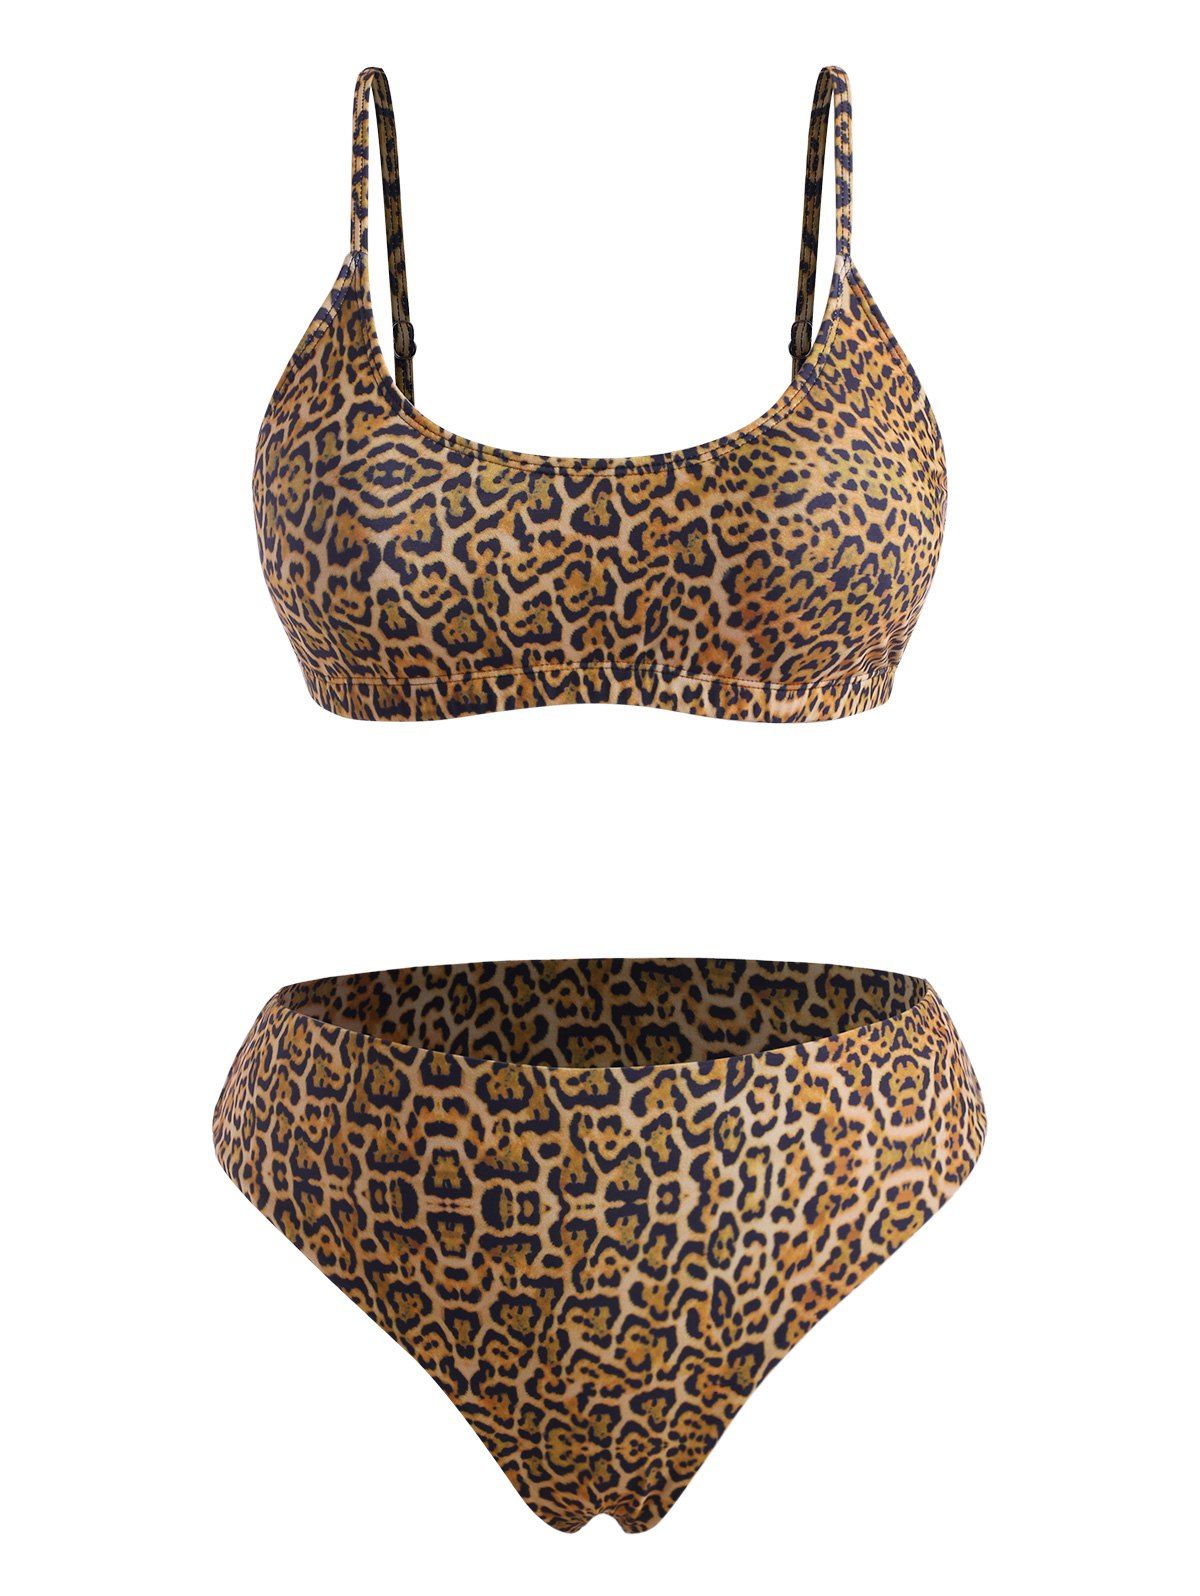 Leopard Print Plus Size Cheeky Bikini Swimwear - multicolor L